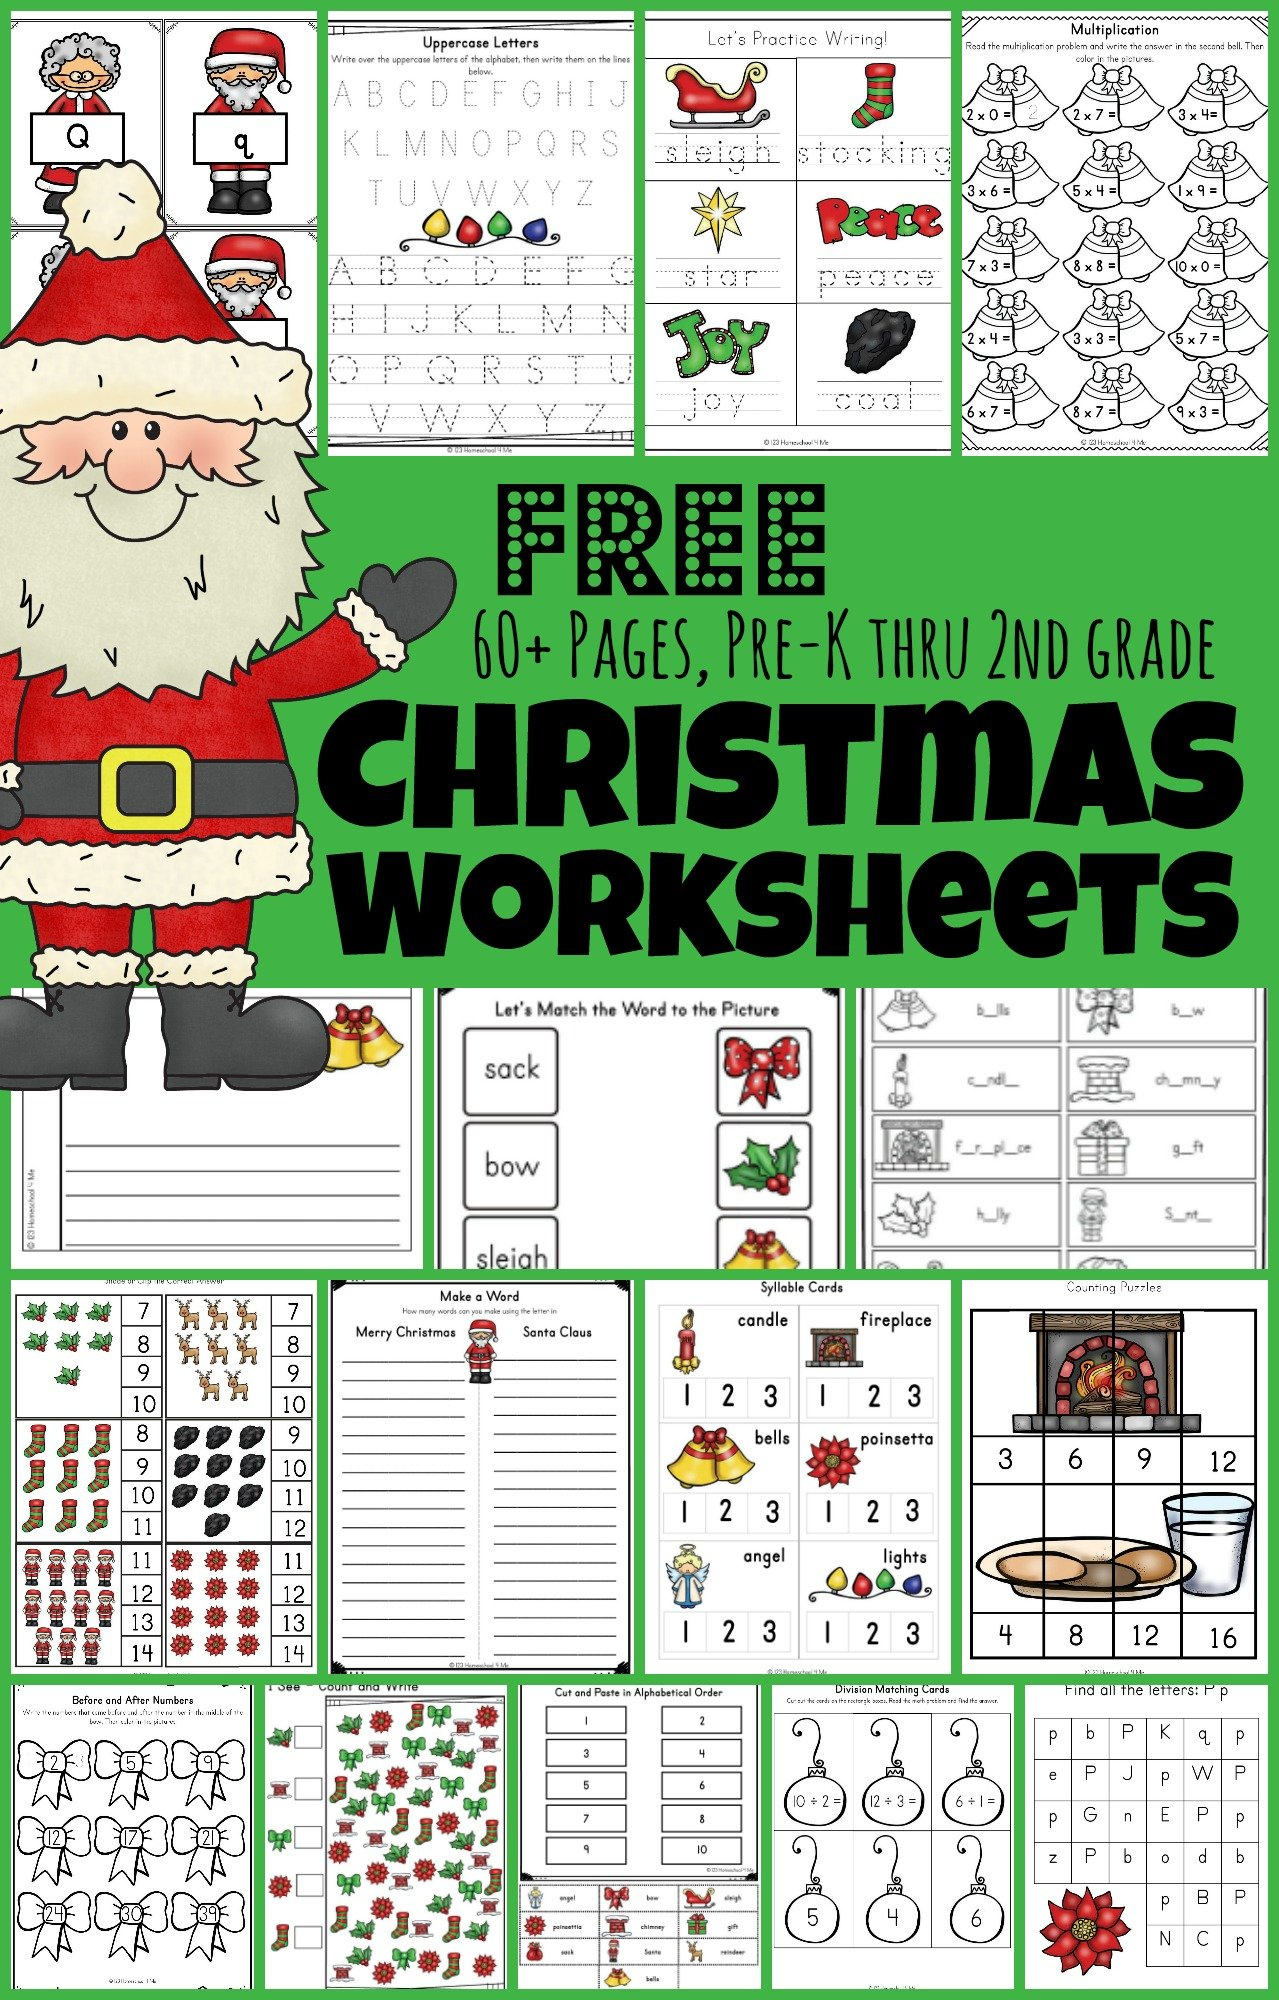 🎅🎄 Free Christmas Worksheets in Free Printable Holiday Worksheets